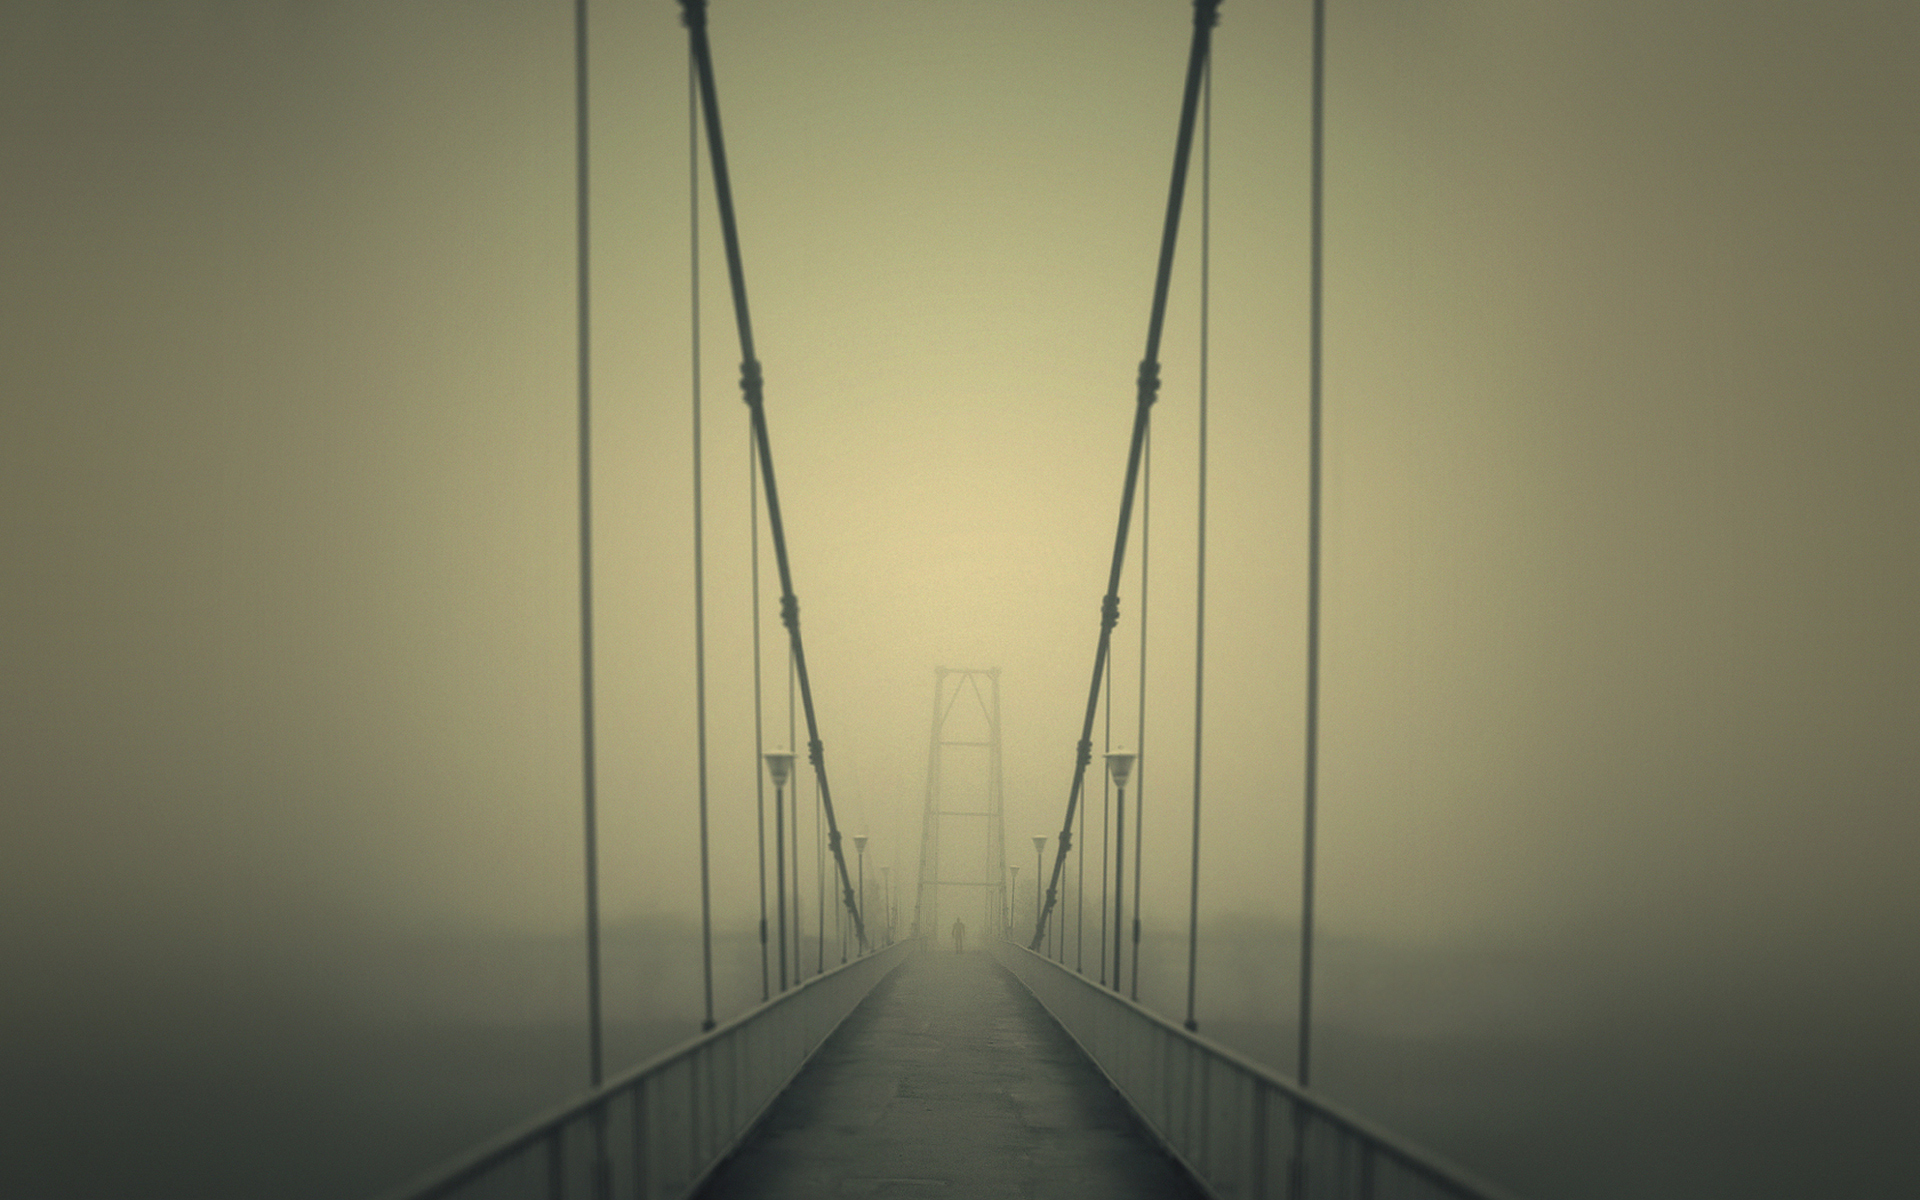 3d обои Мост погрузился в туман, но на том краю виден человек  люди # 51860